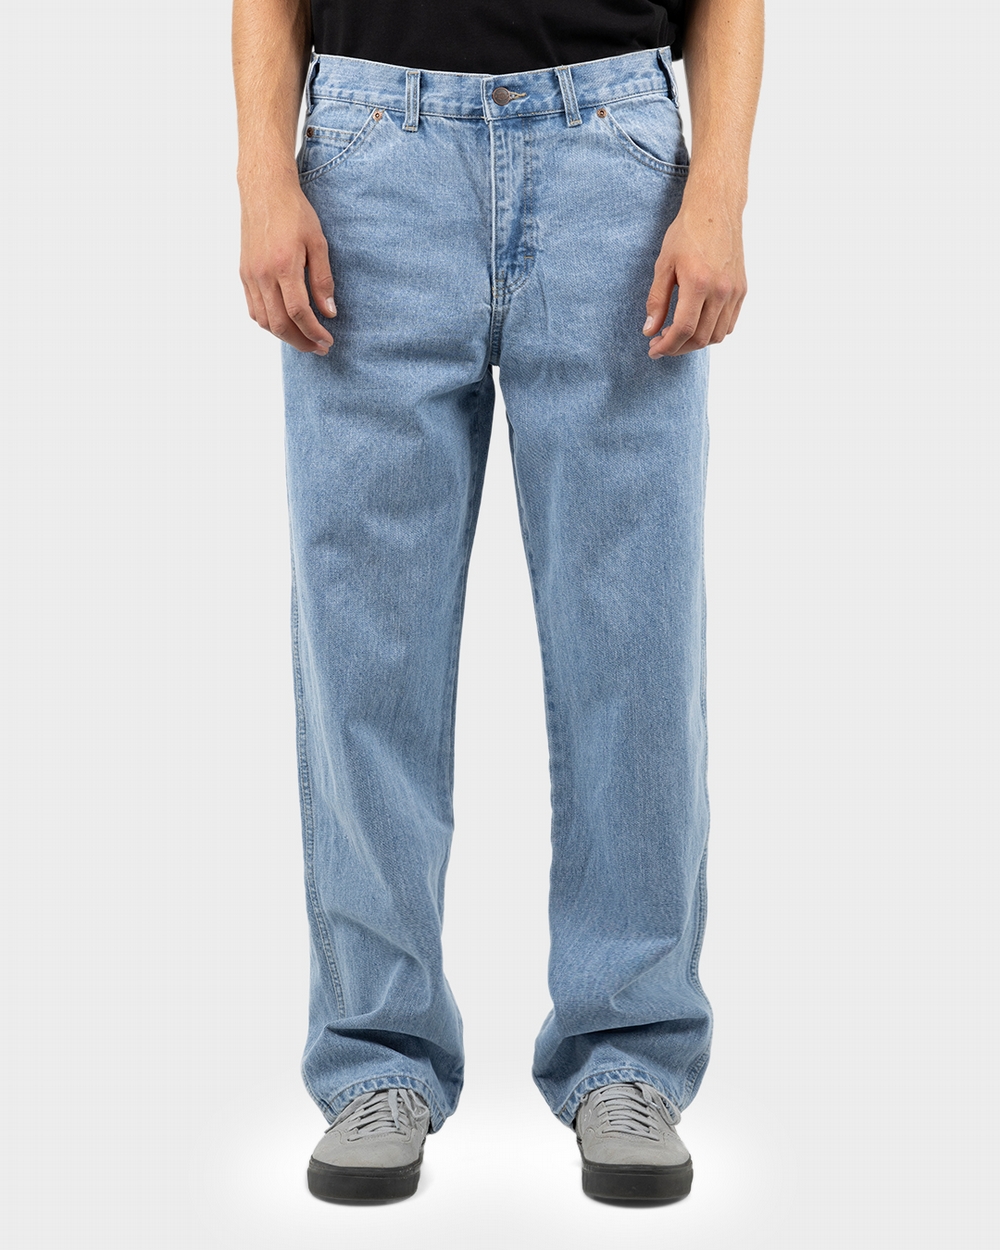 BOSS - Relaxed-fit jeans in wrinkle-effect rigid blue denim